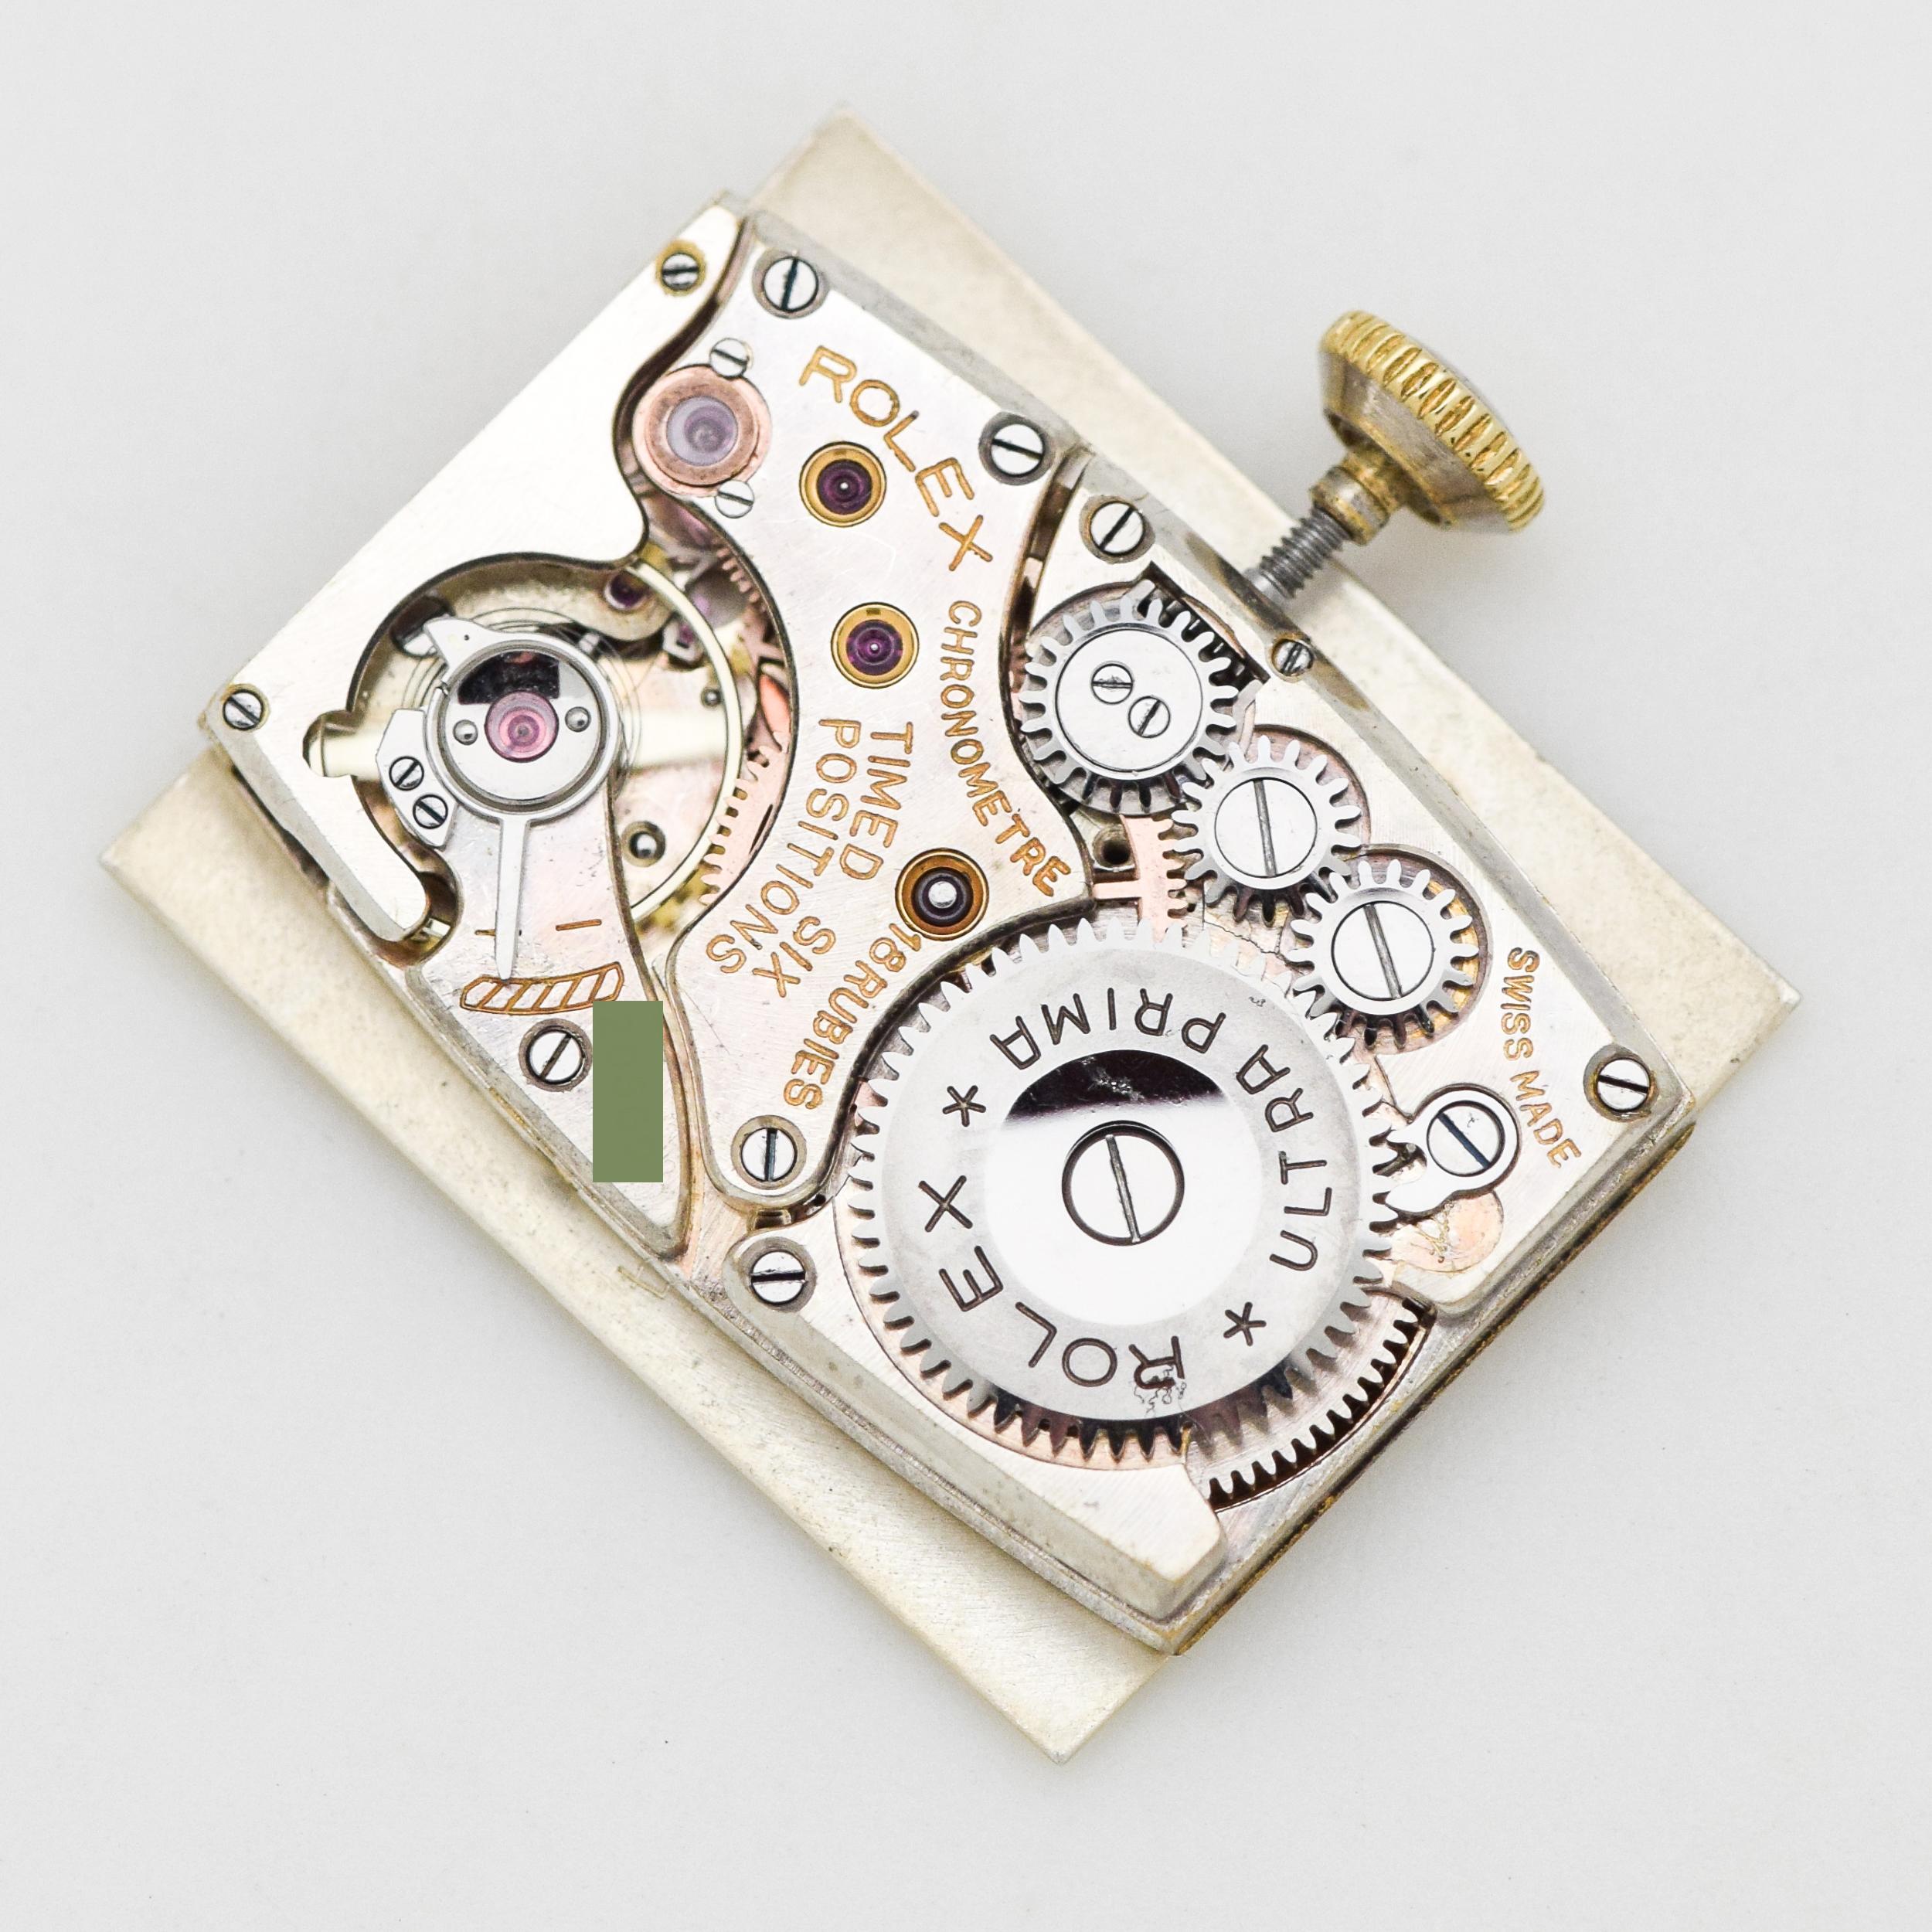 Vintage Rolex Chronometer Rectangular-Shaped 14 Karat Yellow Gold Watch, 1945 For Sale 3